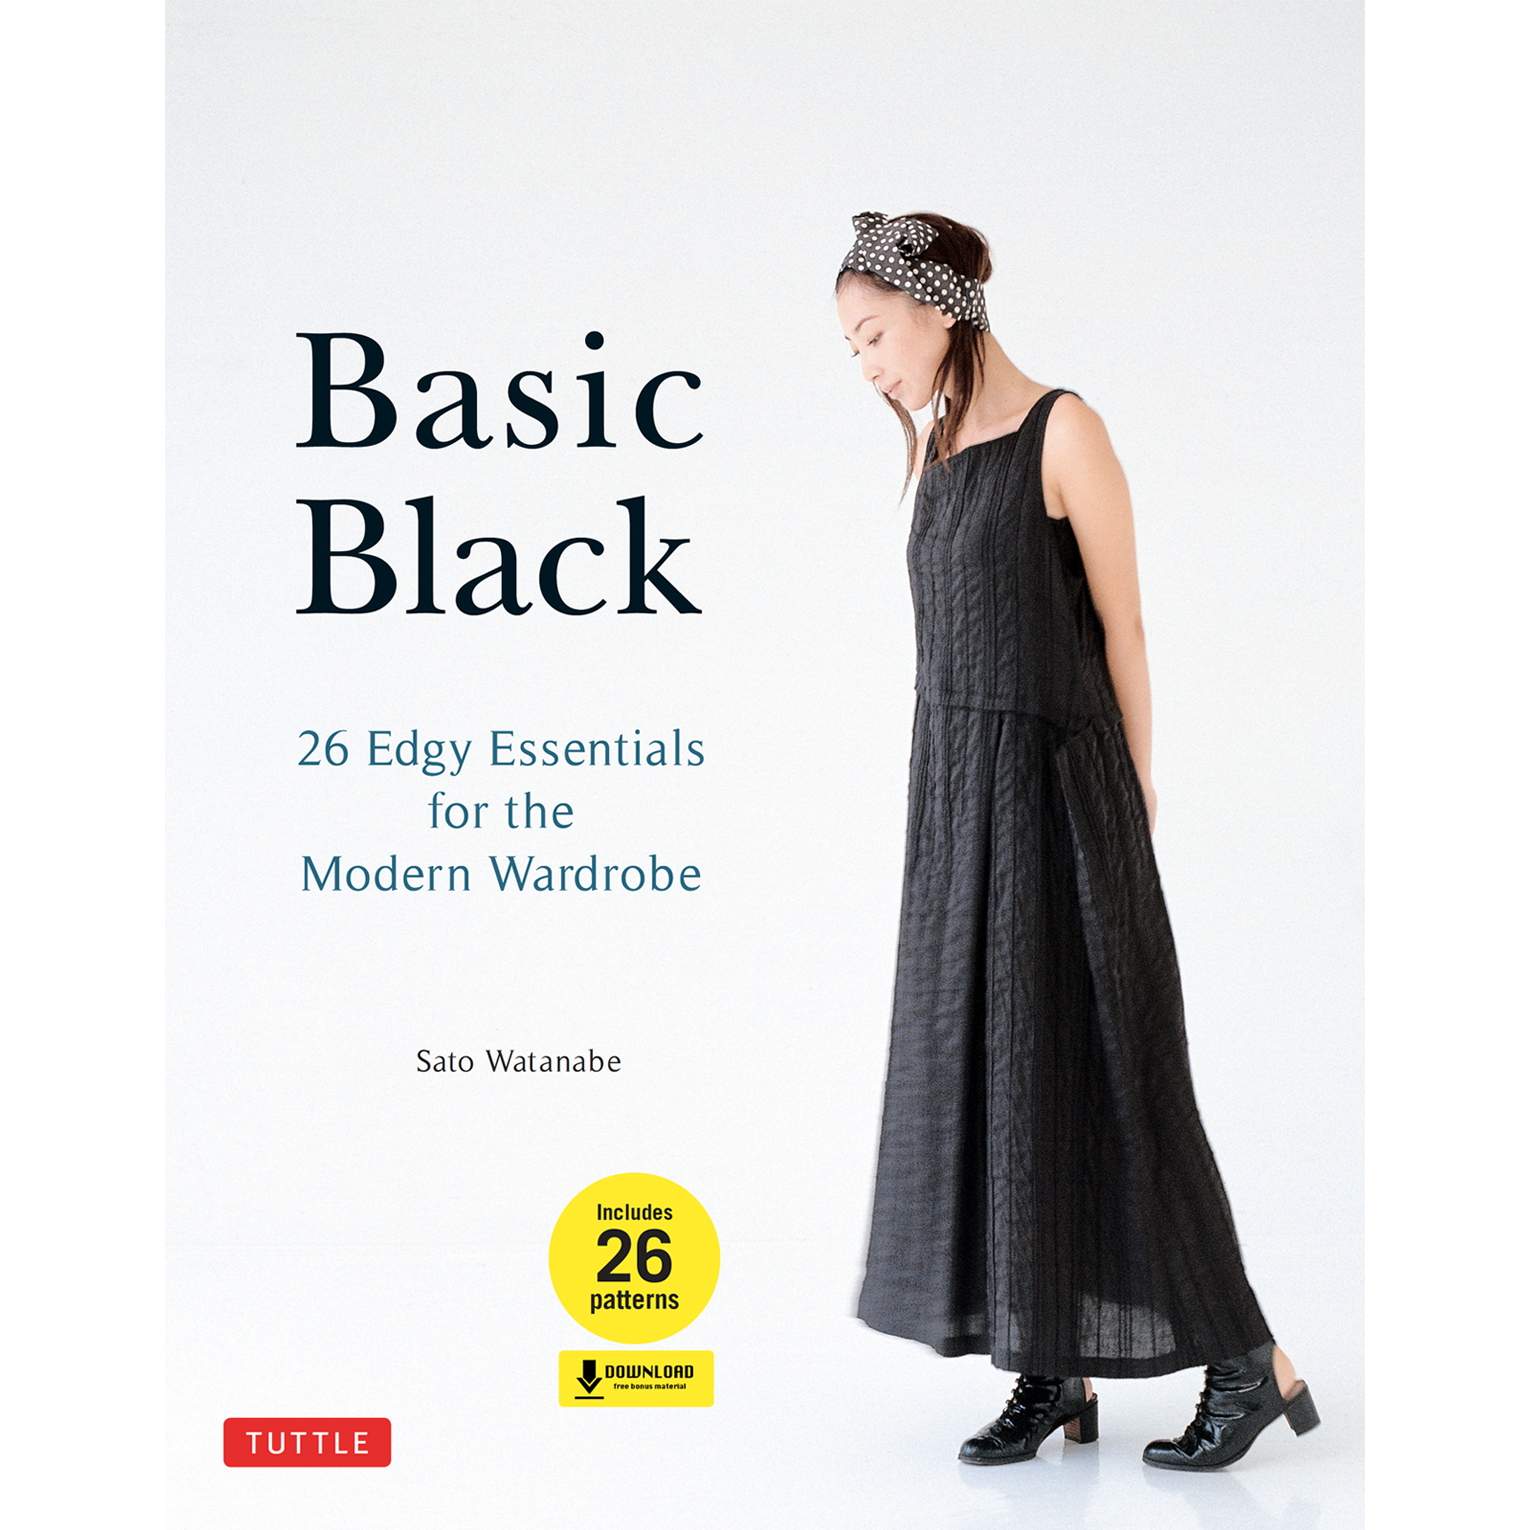 Basic Black: 26 Edgy Essentials for the Modern Wardrobe